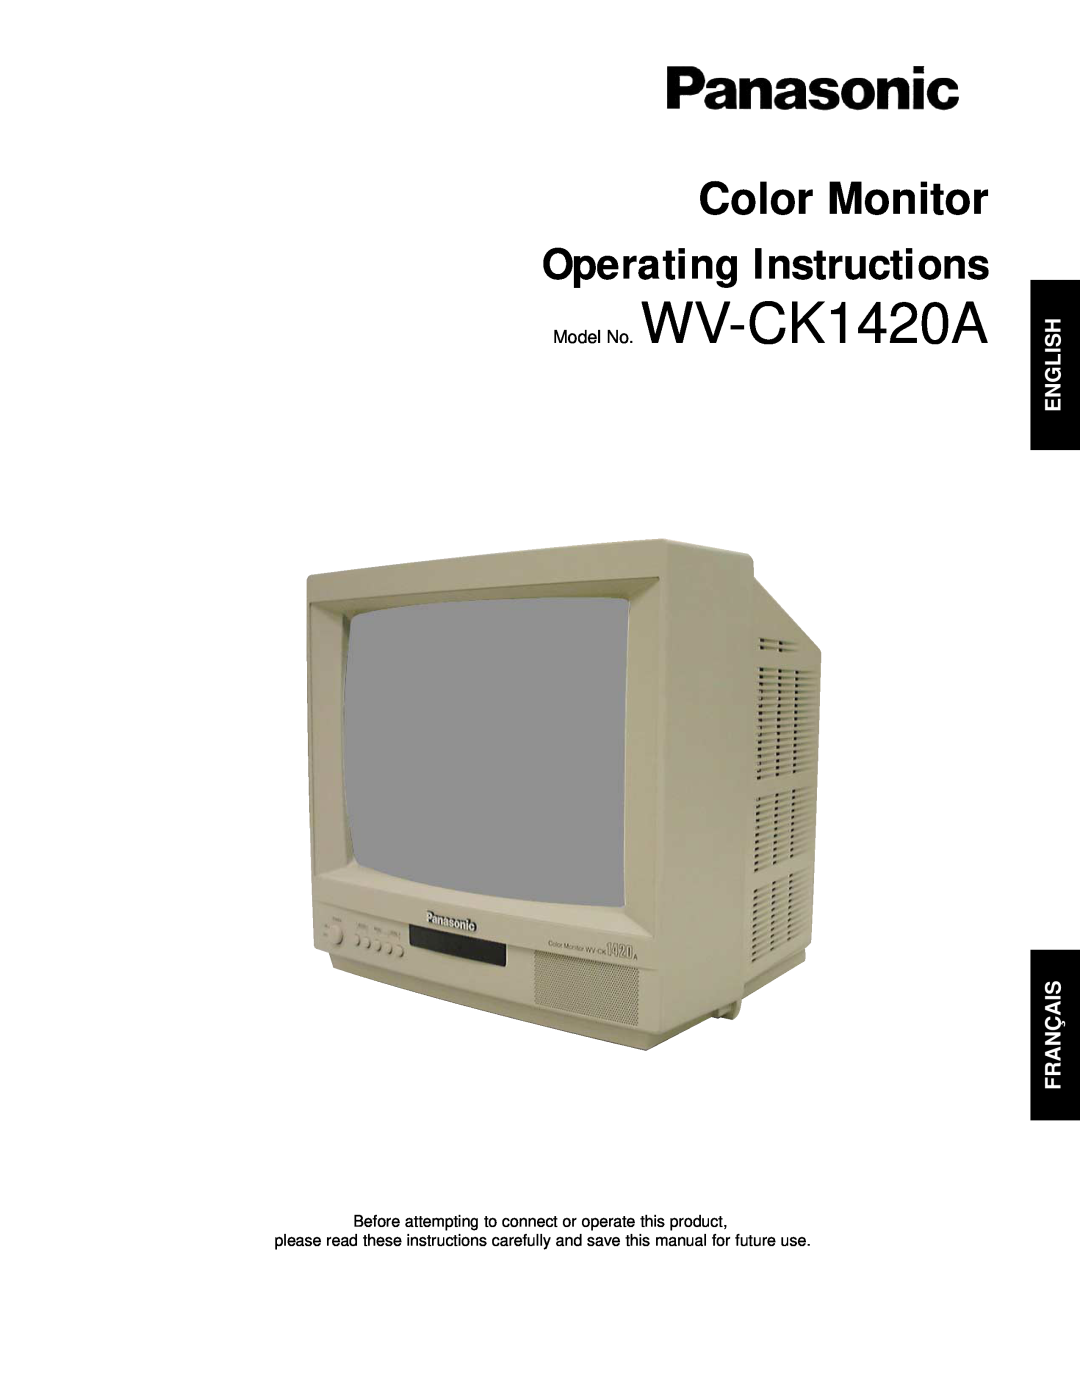 Panasonic manual English Français, Operating Instructions, Color Monitor, Model No. WV-CK1420A 